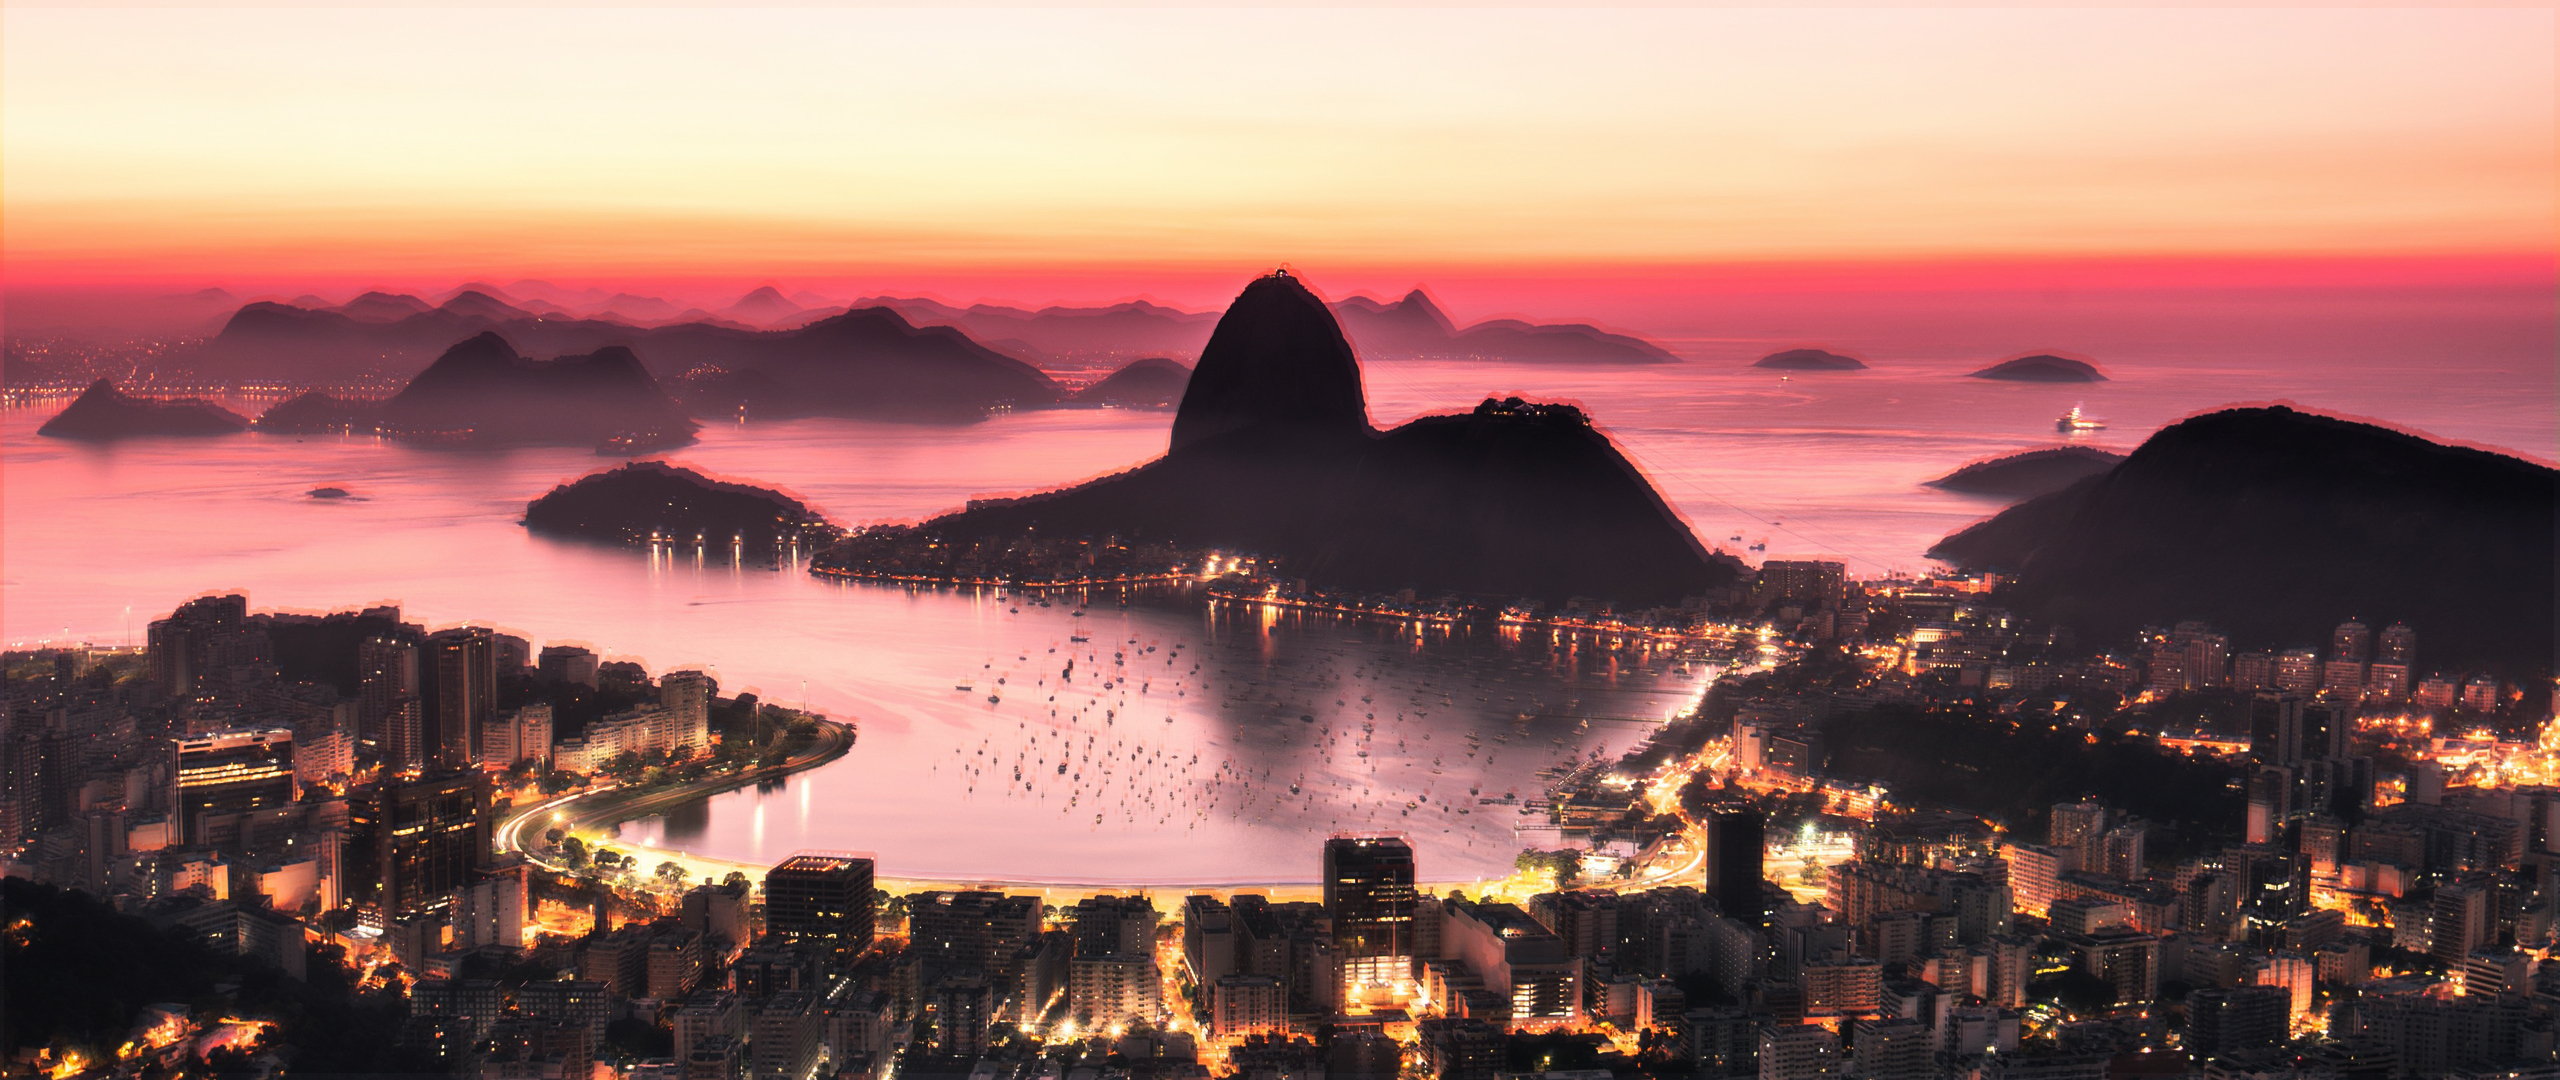 General 2560x1080 landscape city city lights neon purple synthwave Brazil Rio de Janeiro Sugarloaf Mountain Botafogo Beach